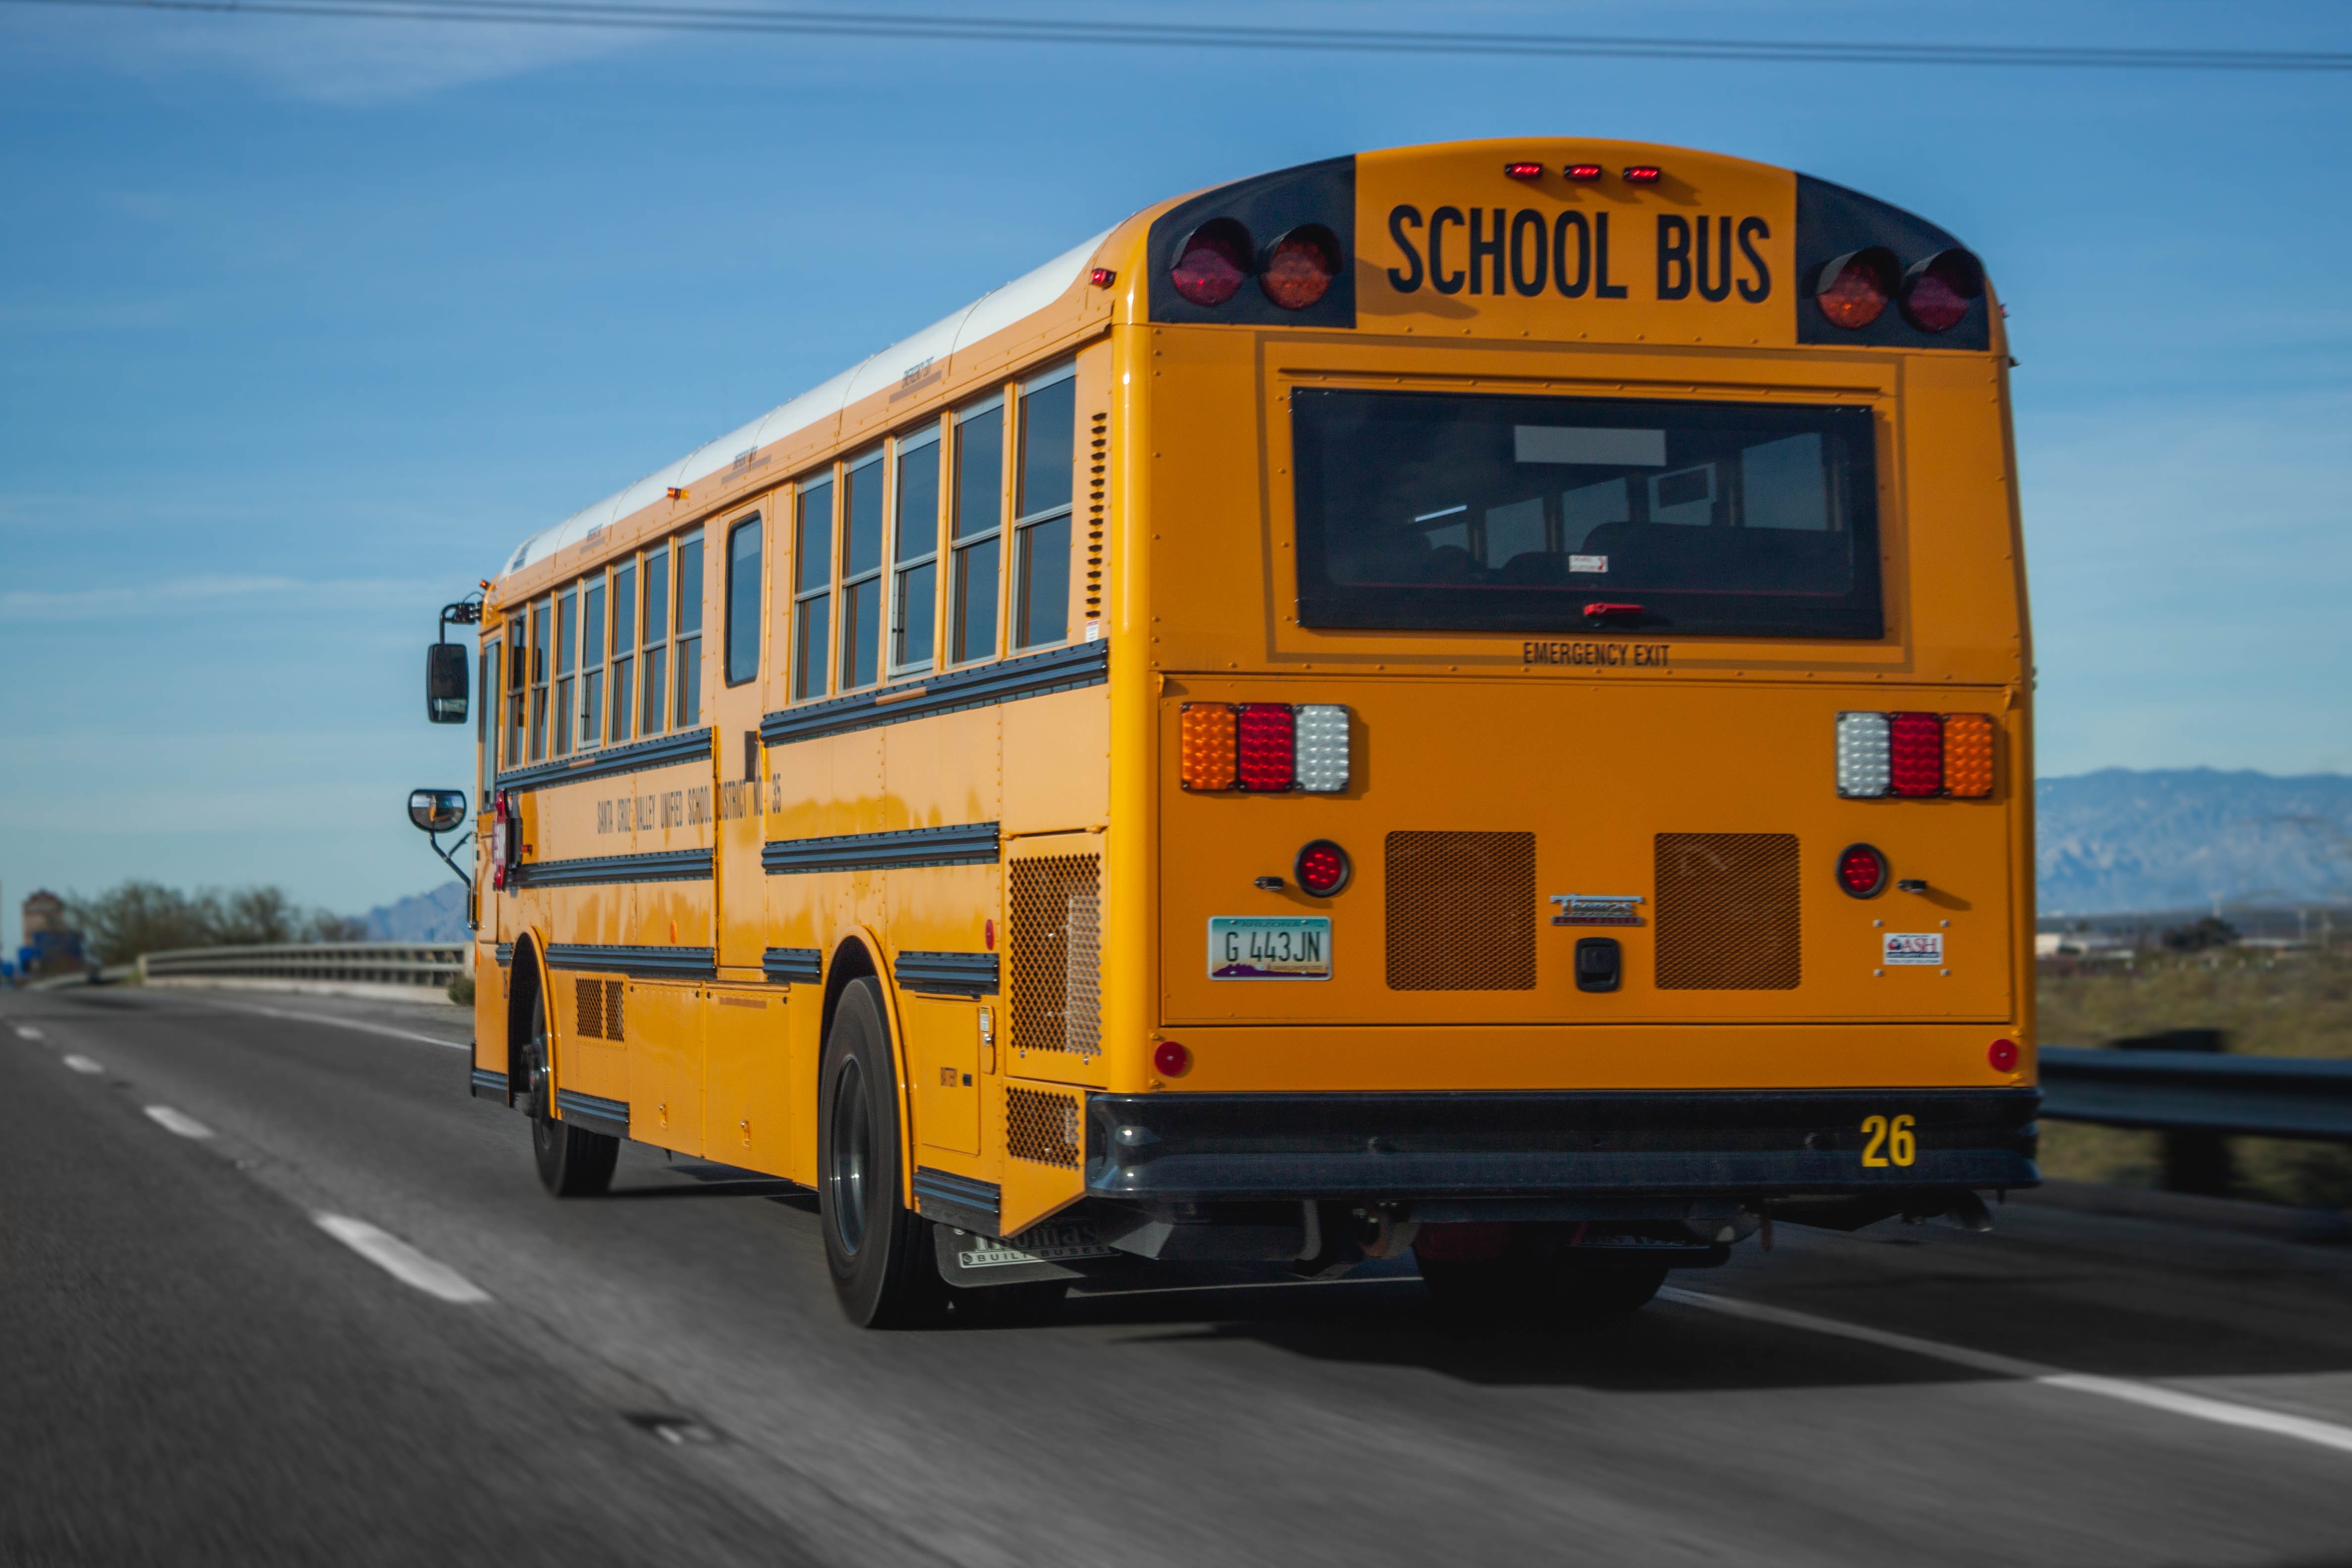 School bus on the road; image by Elijah Ekdahl, via Unsplash.com.